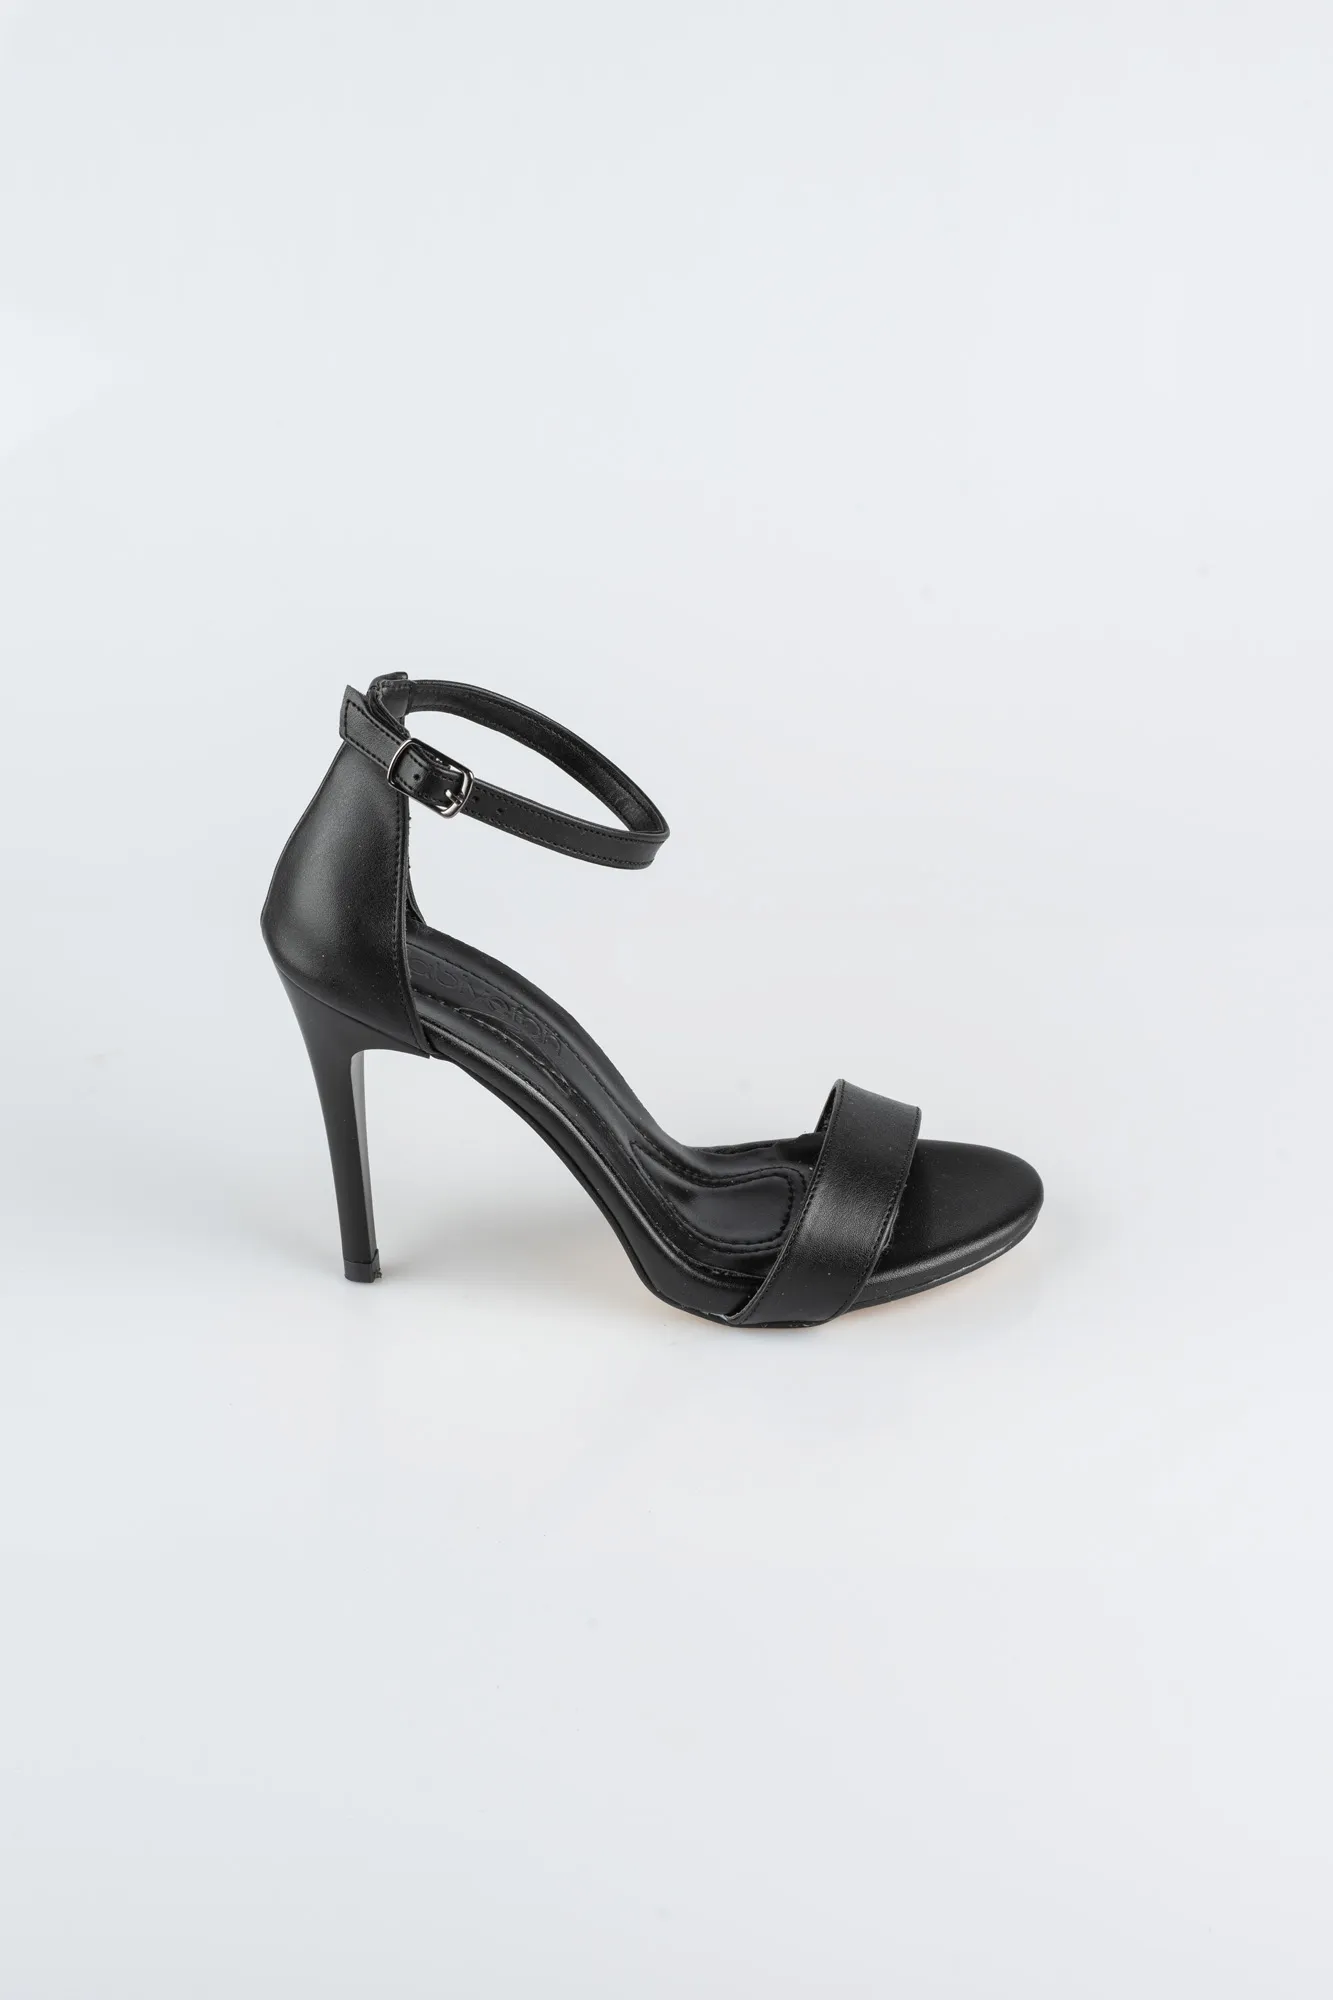 Black-Leather Evening Shoe ABD1452